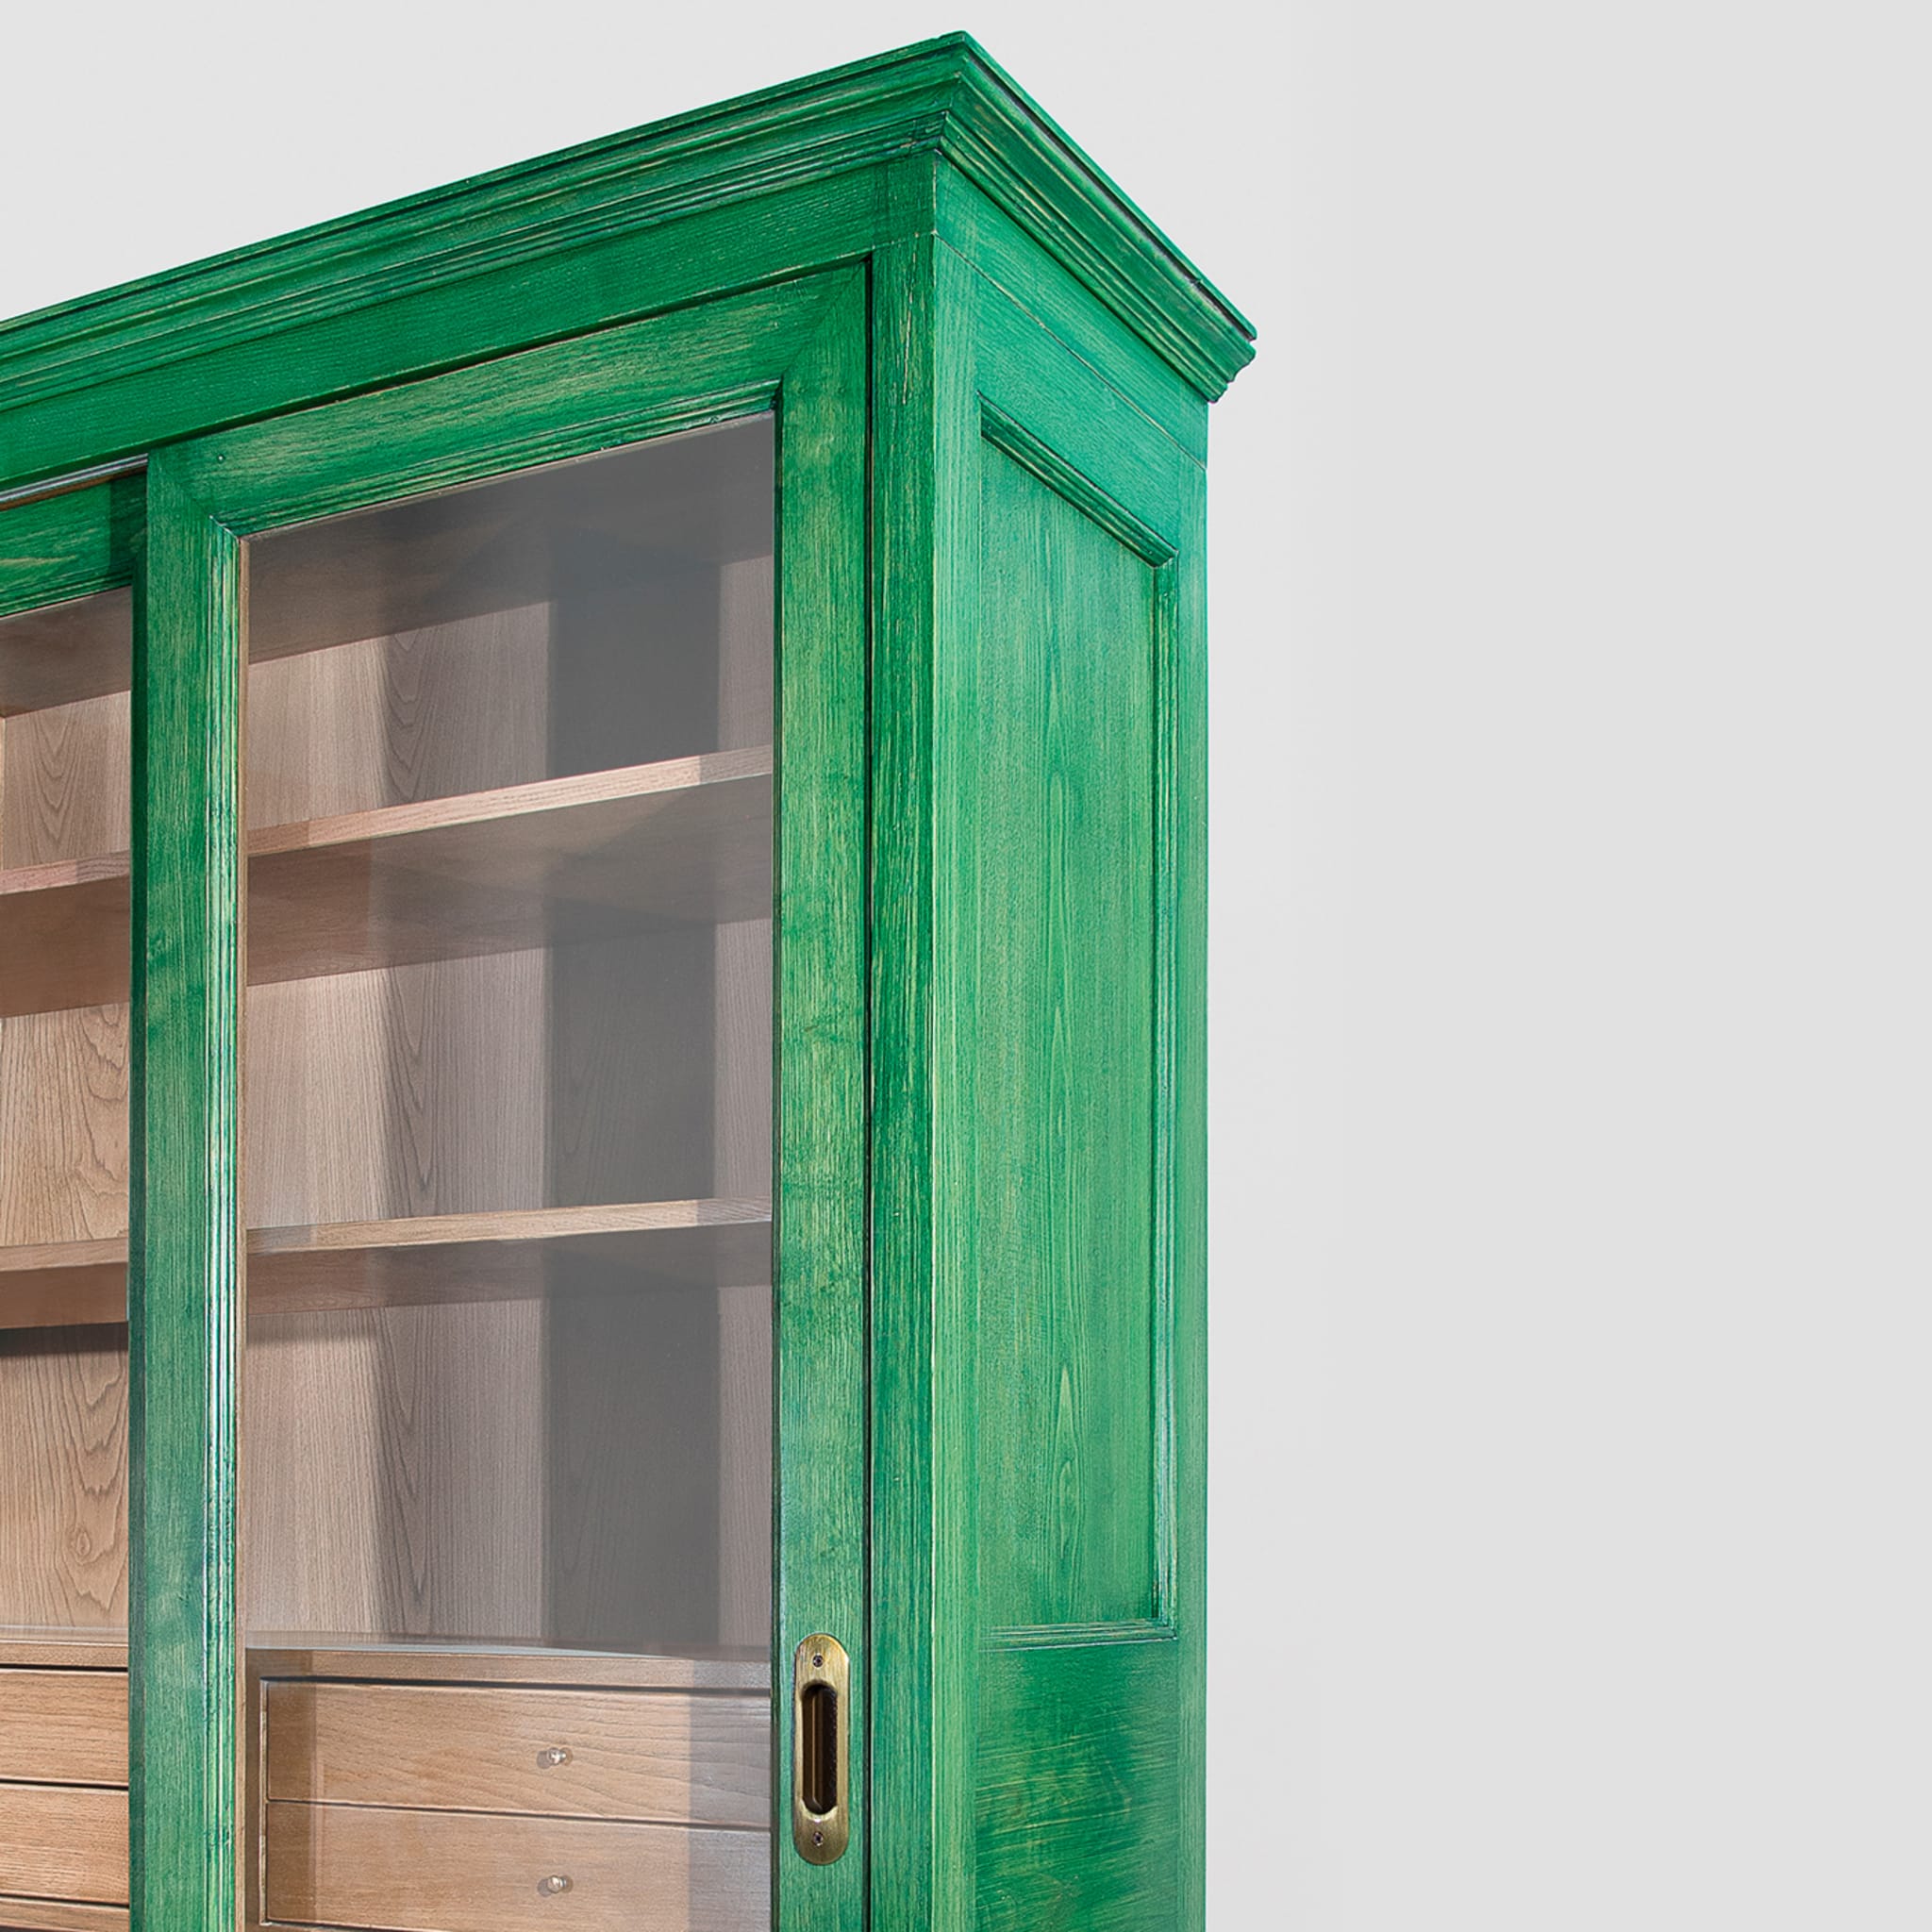 Green Sliding Doors Bookshelf #1 - Alternative view 1